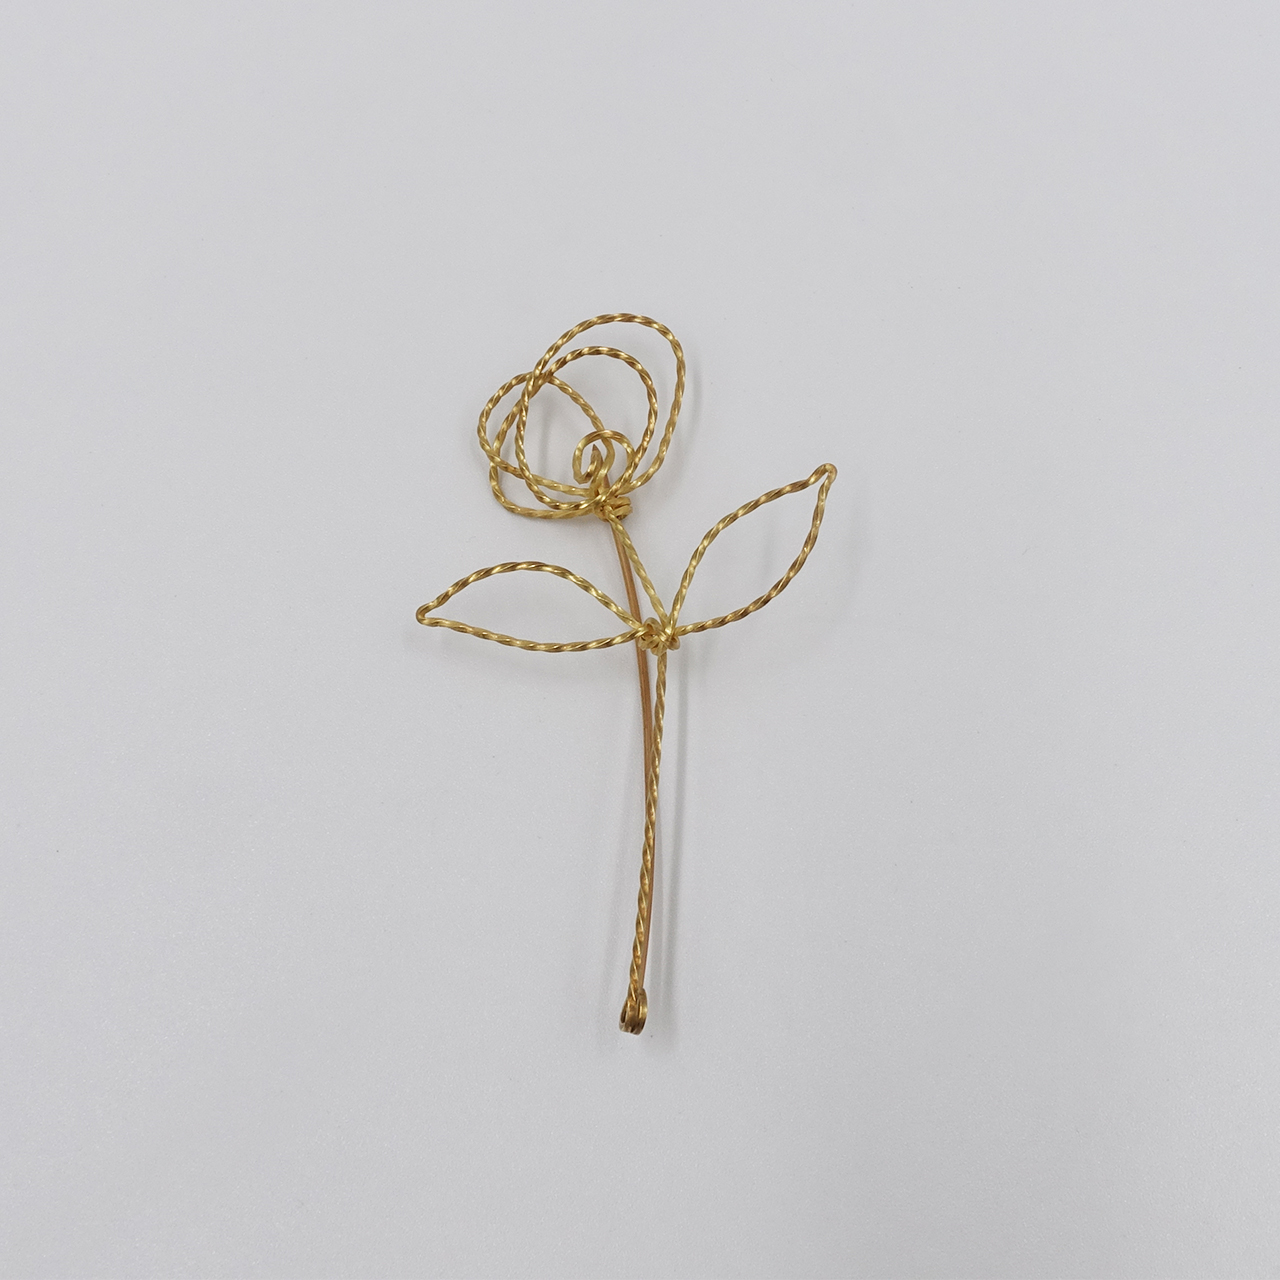 Peed Flower no.1 by David Bielander